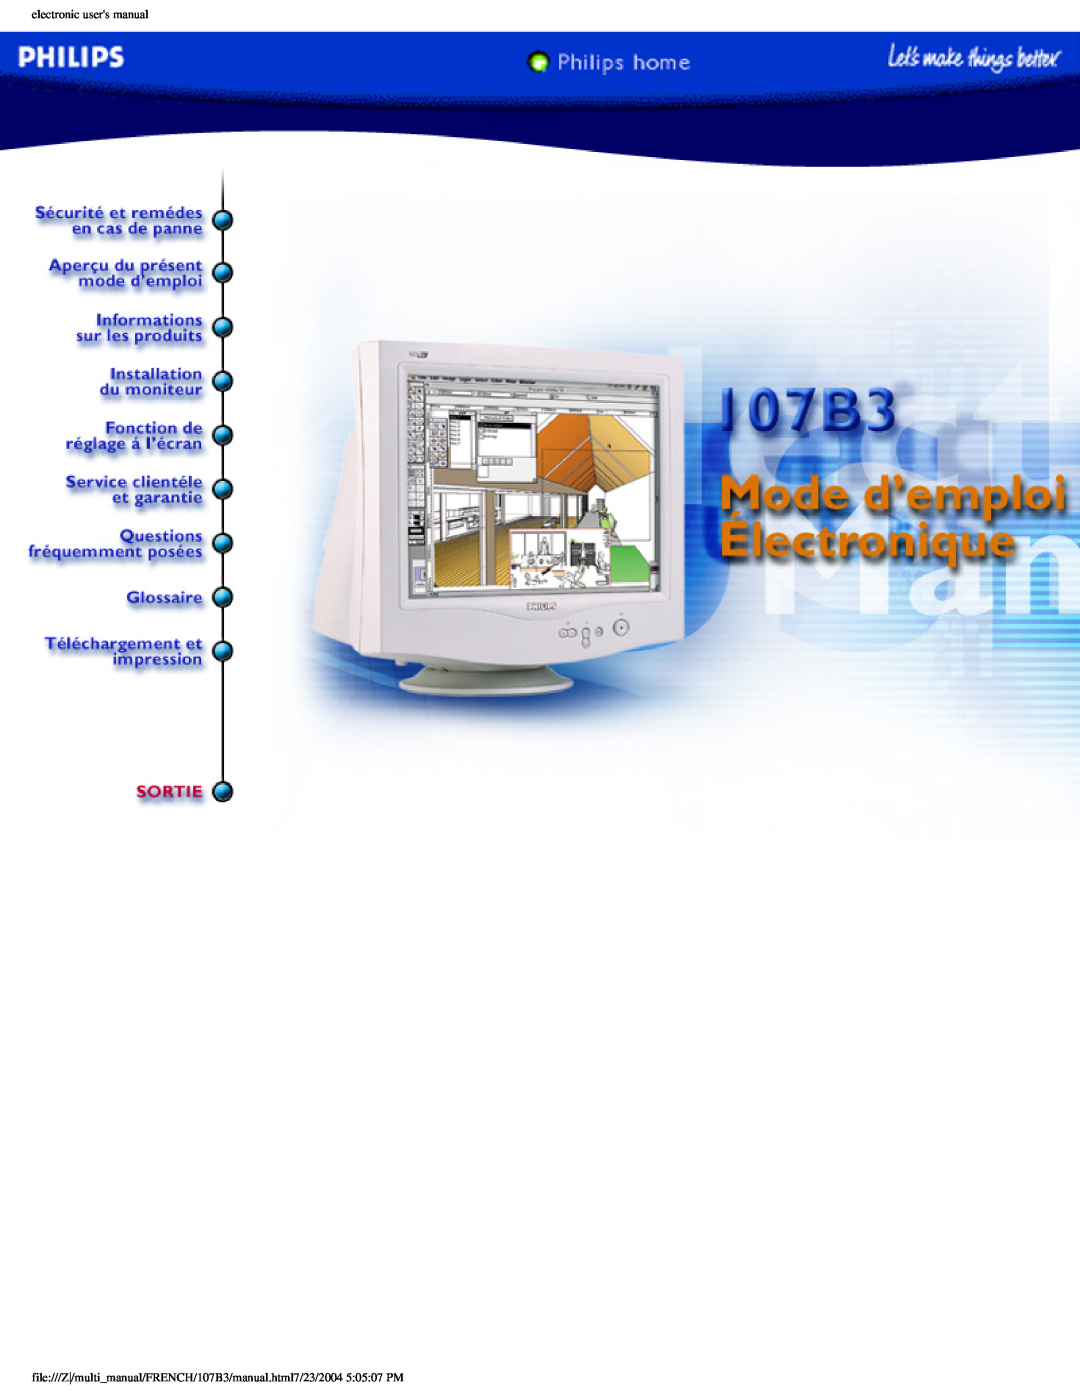 Philips 107B3 user manual electronic users manual 